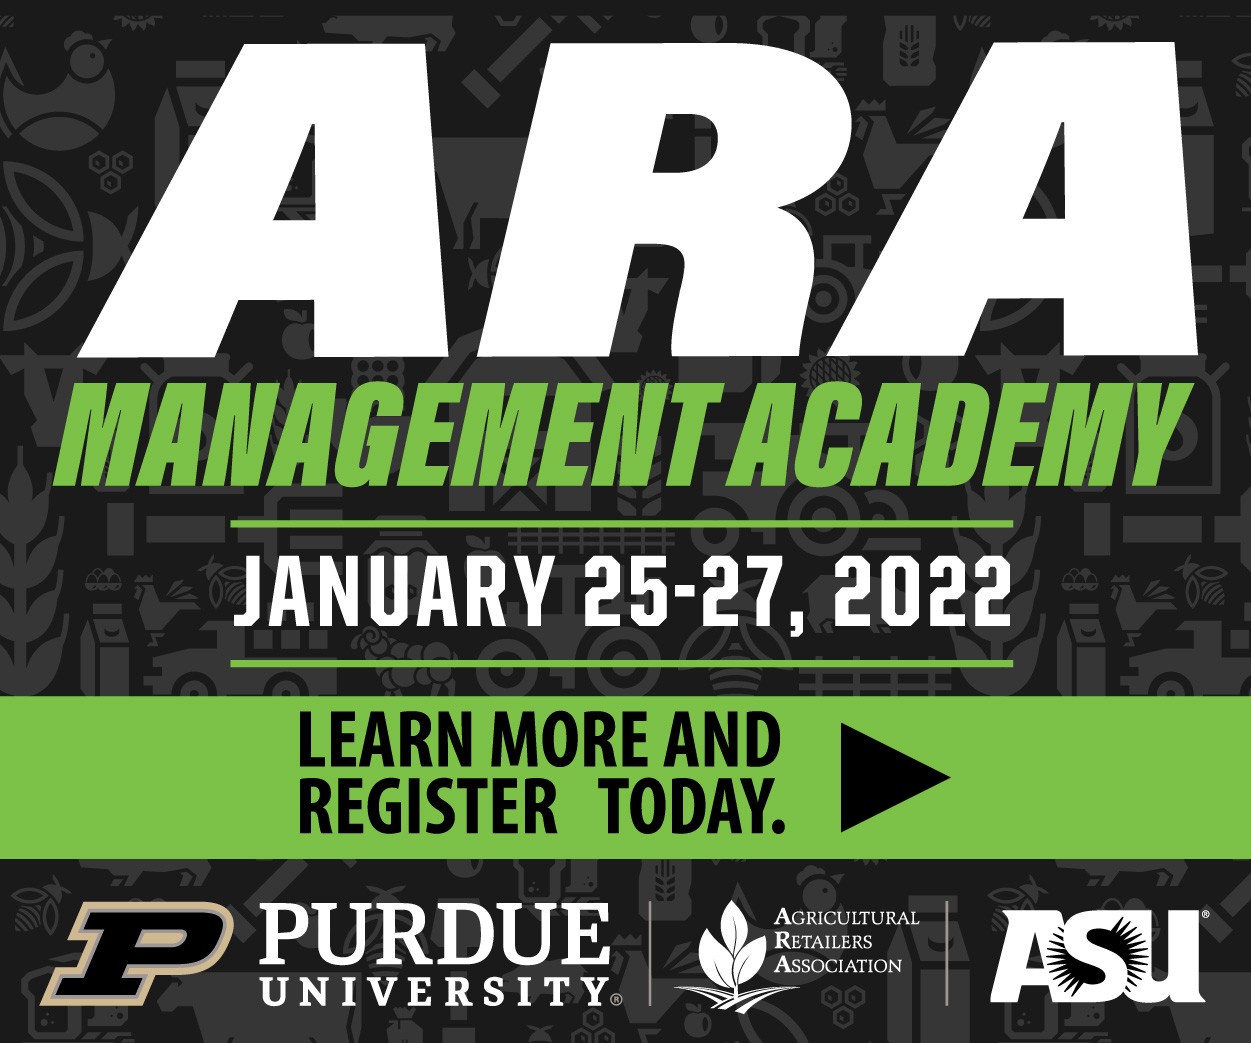 ARA Management Academy